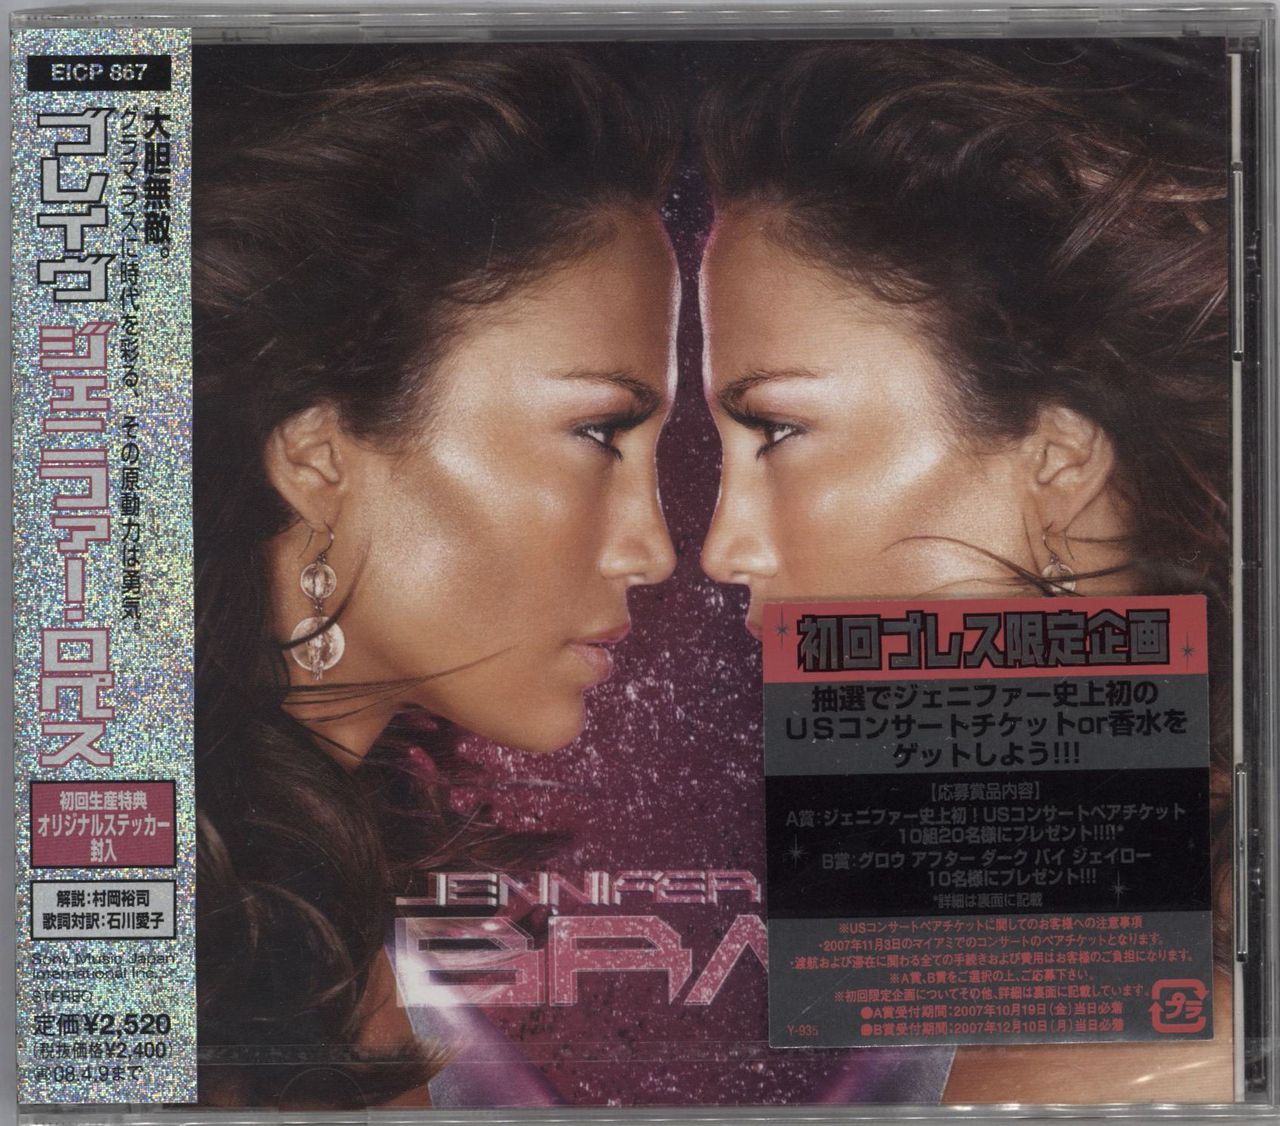 Jennifer Lopez Brave - Promo + Obi - Sealed Japanese Promo CD album (CDLP) EICP-867